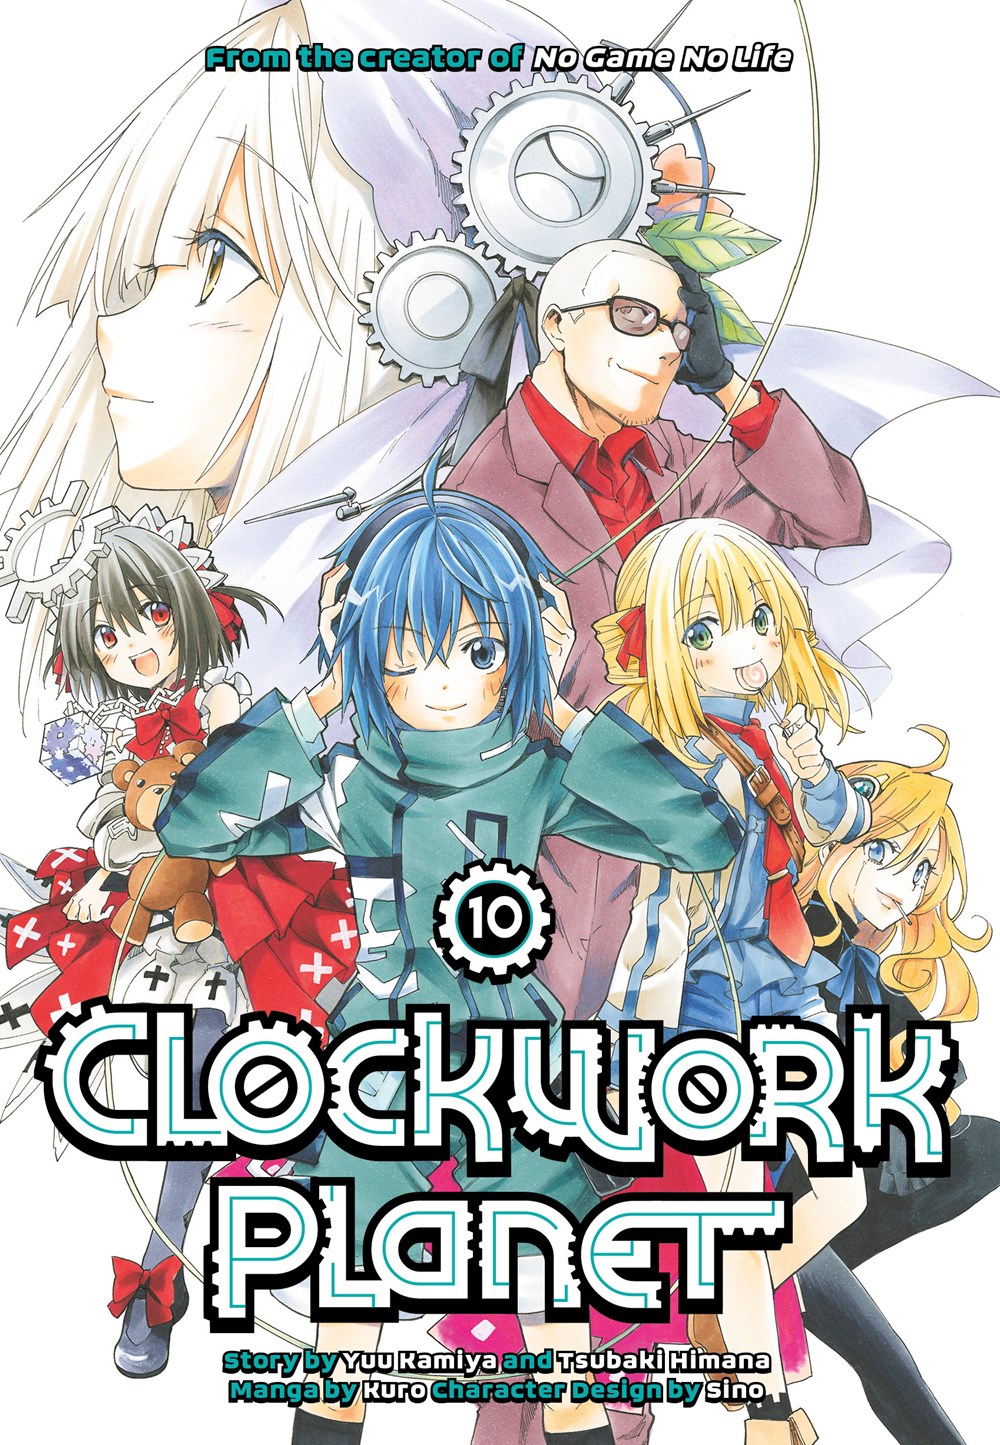 Clockwork planet manga